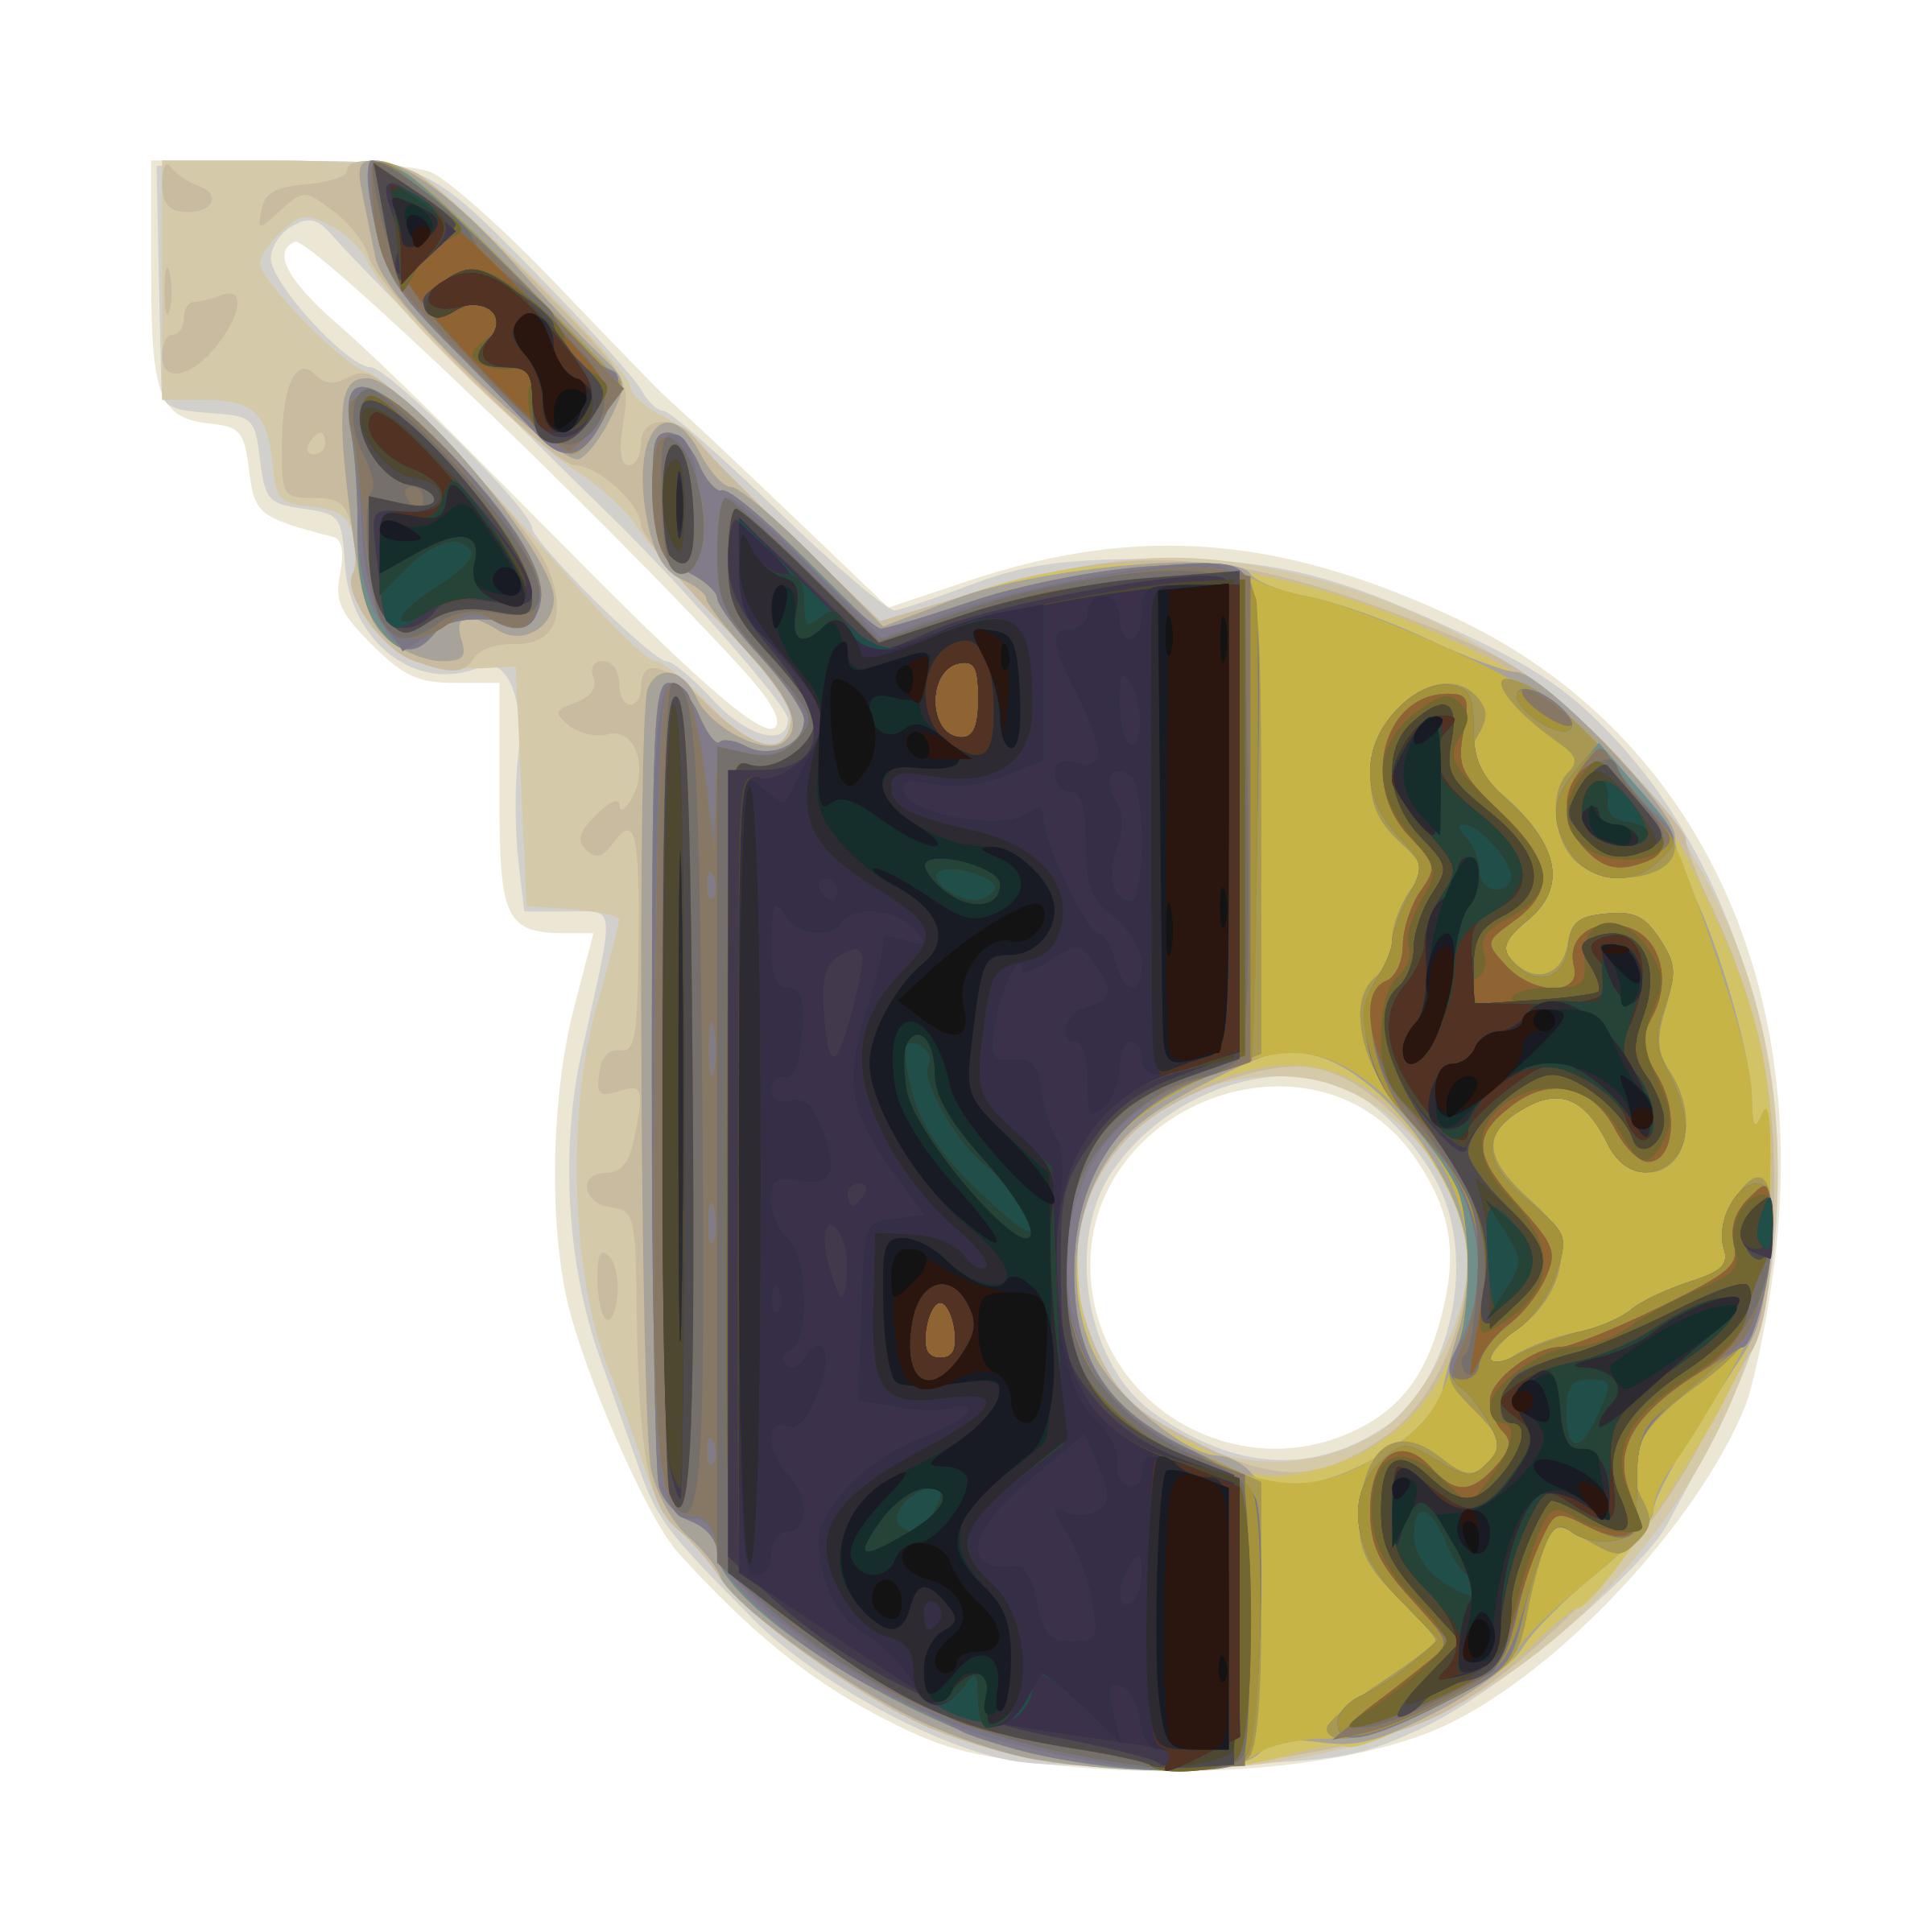 Cloth key(akramly) icons